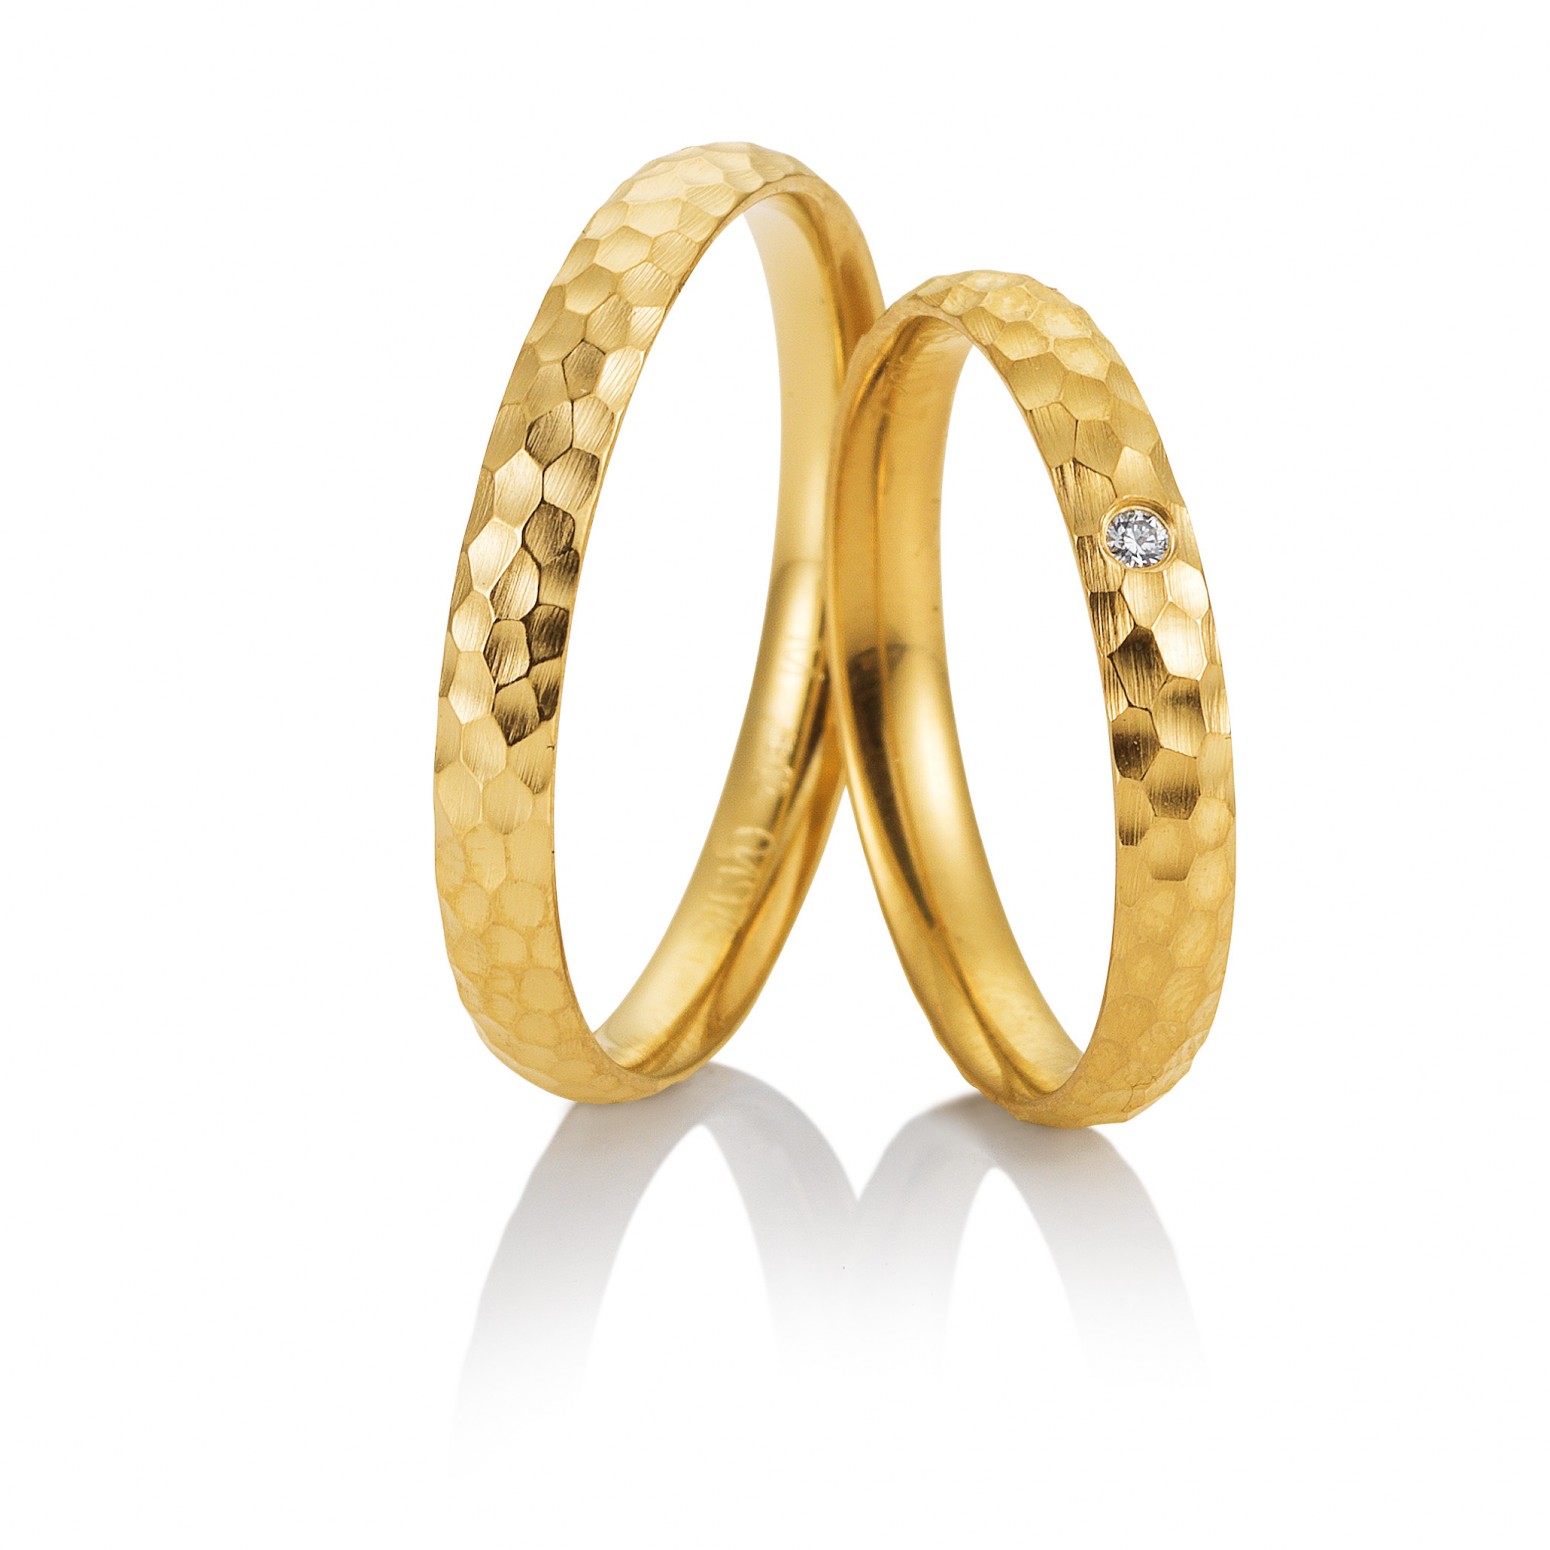 Saint Maurice wedding rings in yellow gold, K9, pair da3594 WEDDING RINGS Κοσμηματα - chrilia.gr